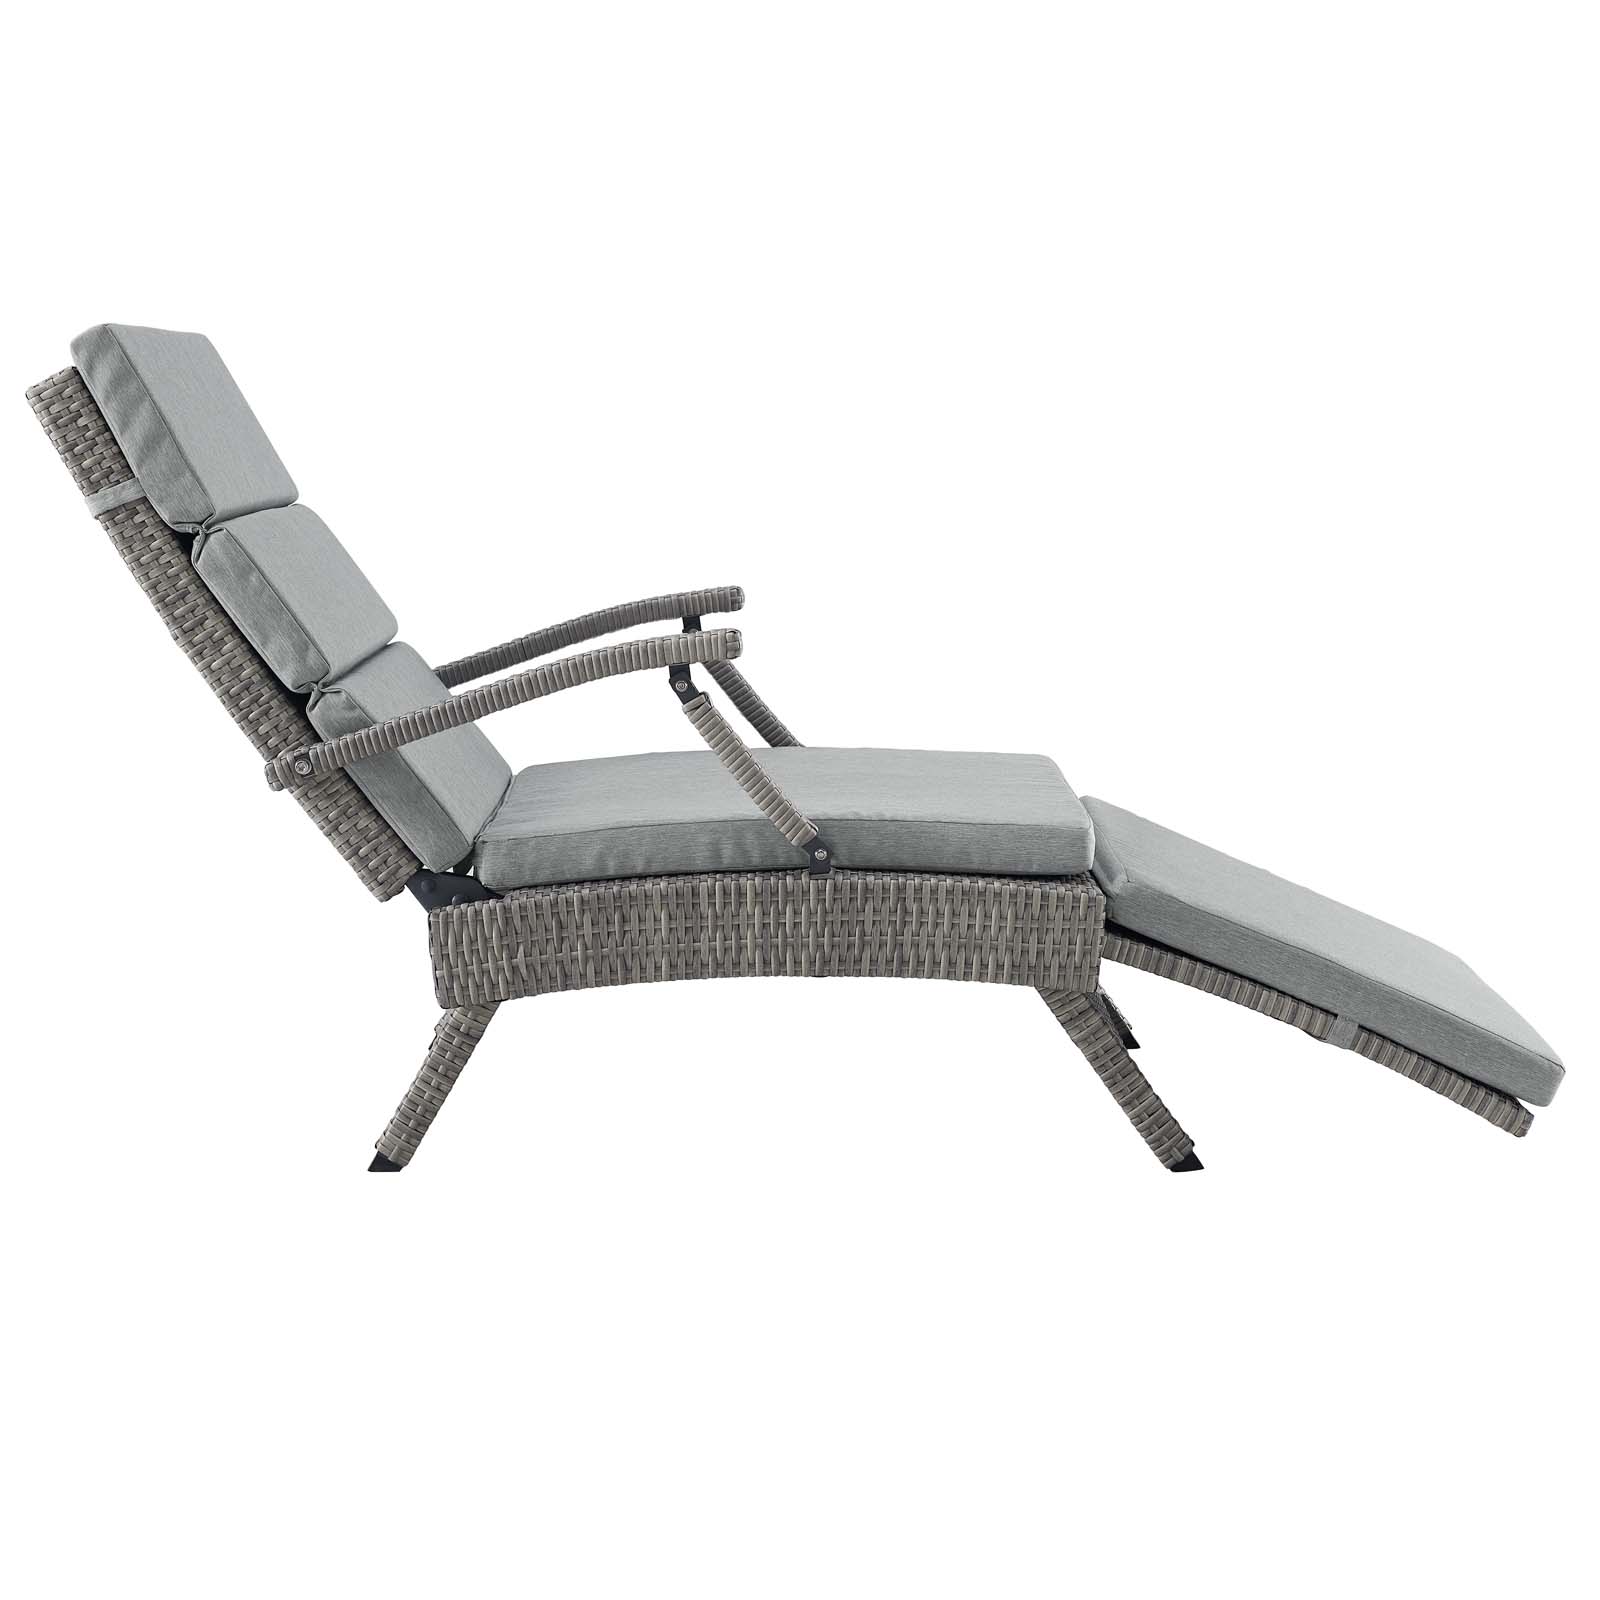 Modern Contemporary Urban Design Outdoor Patio Balcony Garden Furniture Lounge Chair Chaise, Rattan Wicker, Grey Gray - image 3 of 8